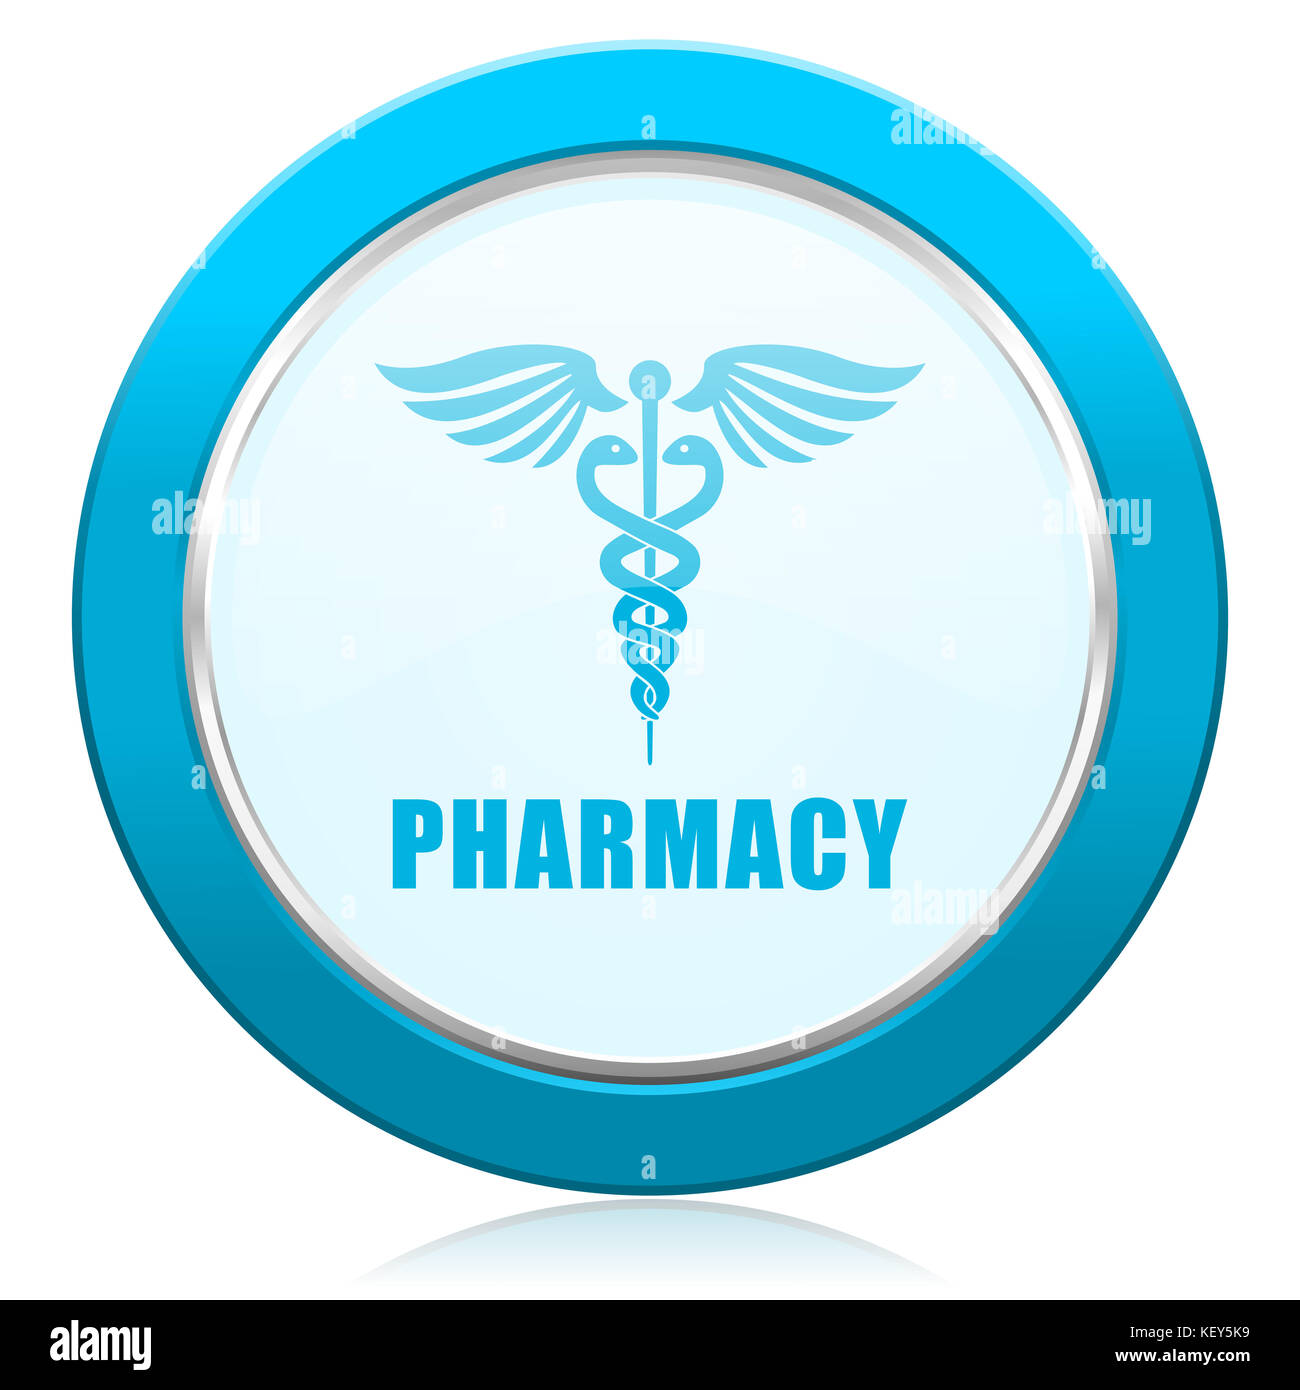 pharmacy symbol wallpaper